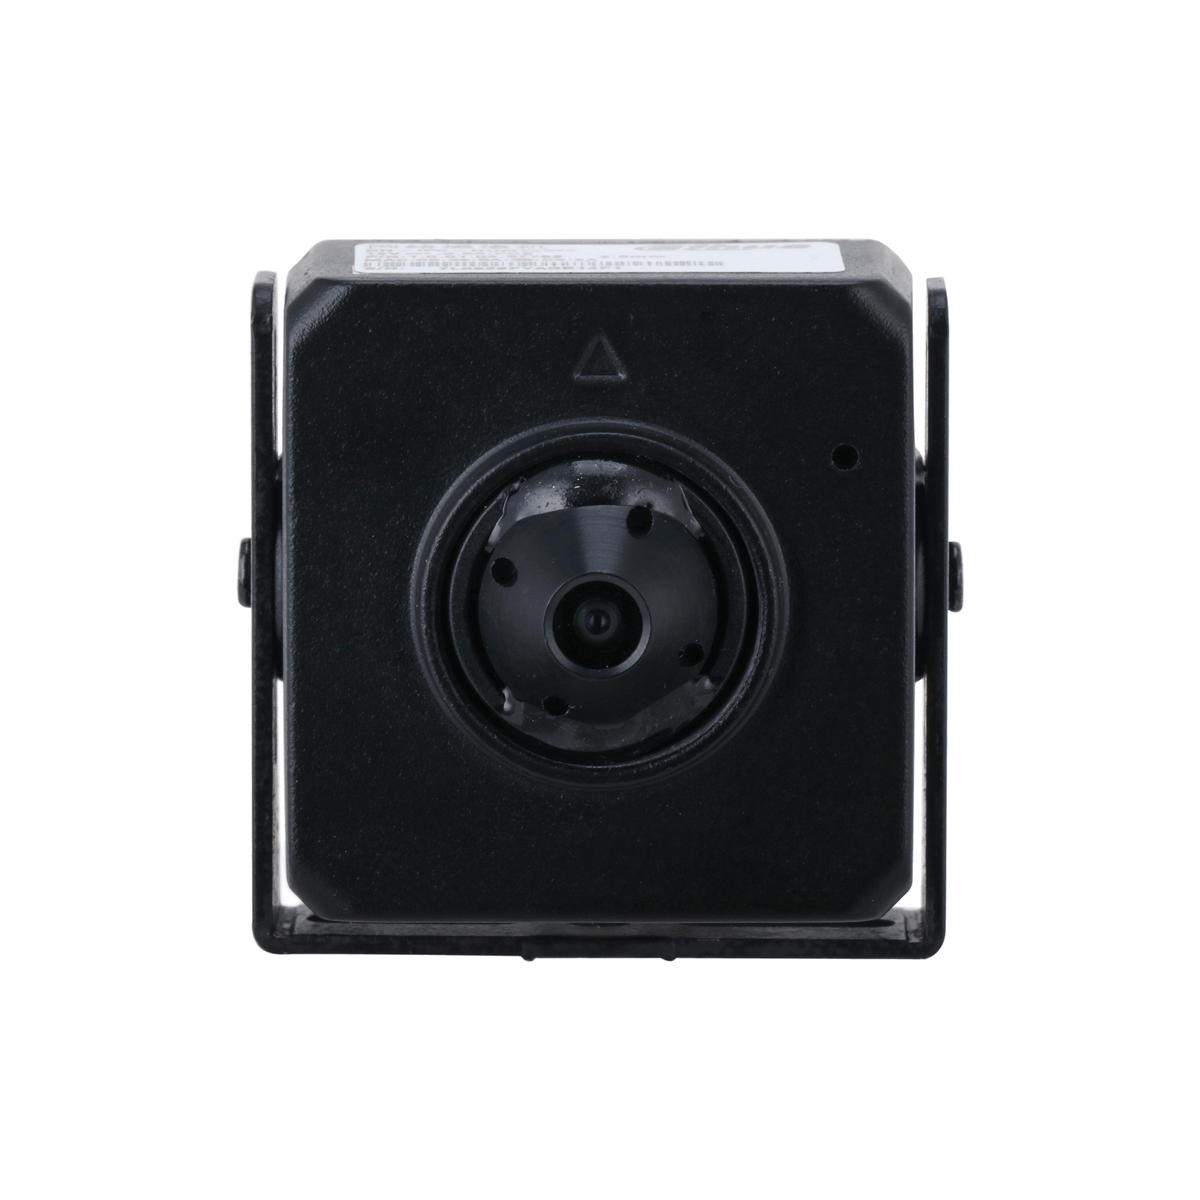 DAHUA IPC-HUM4231S-L4 2MP Fixed-focal Pinhole Network Camera